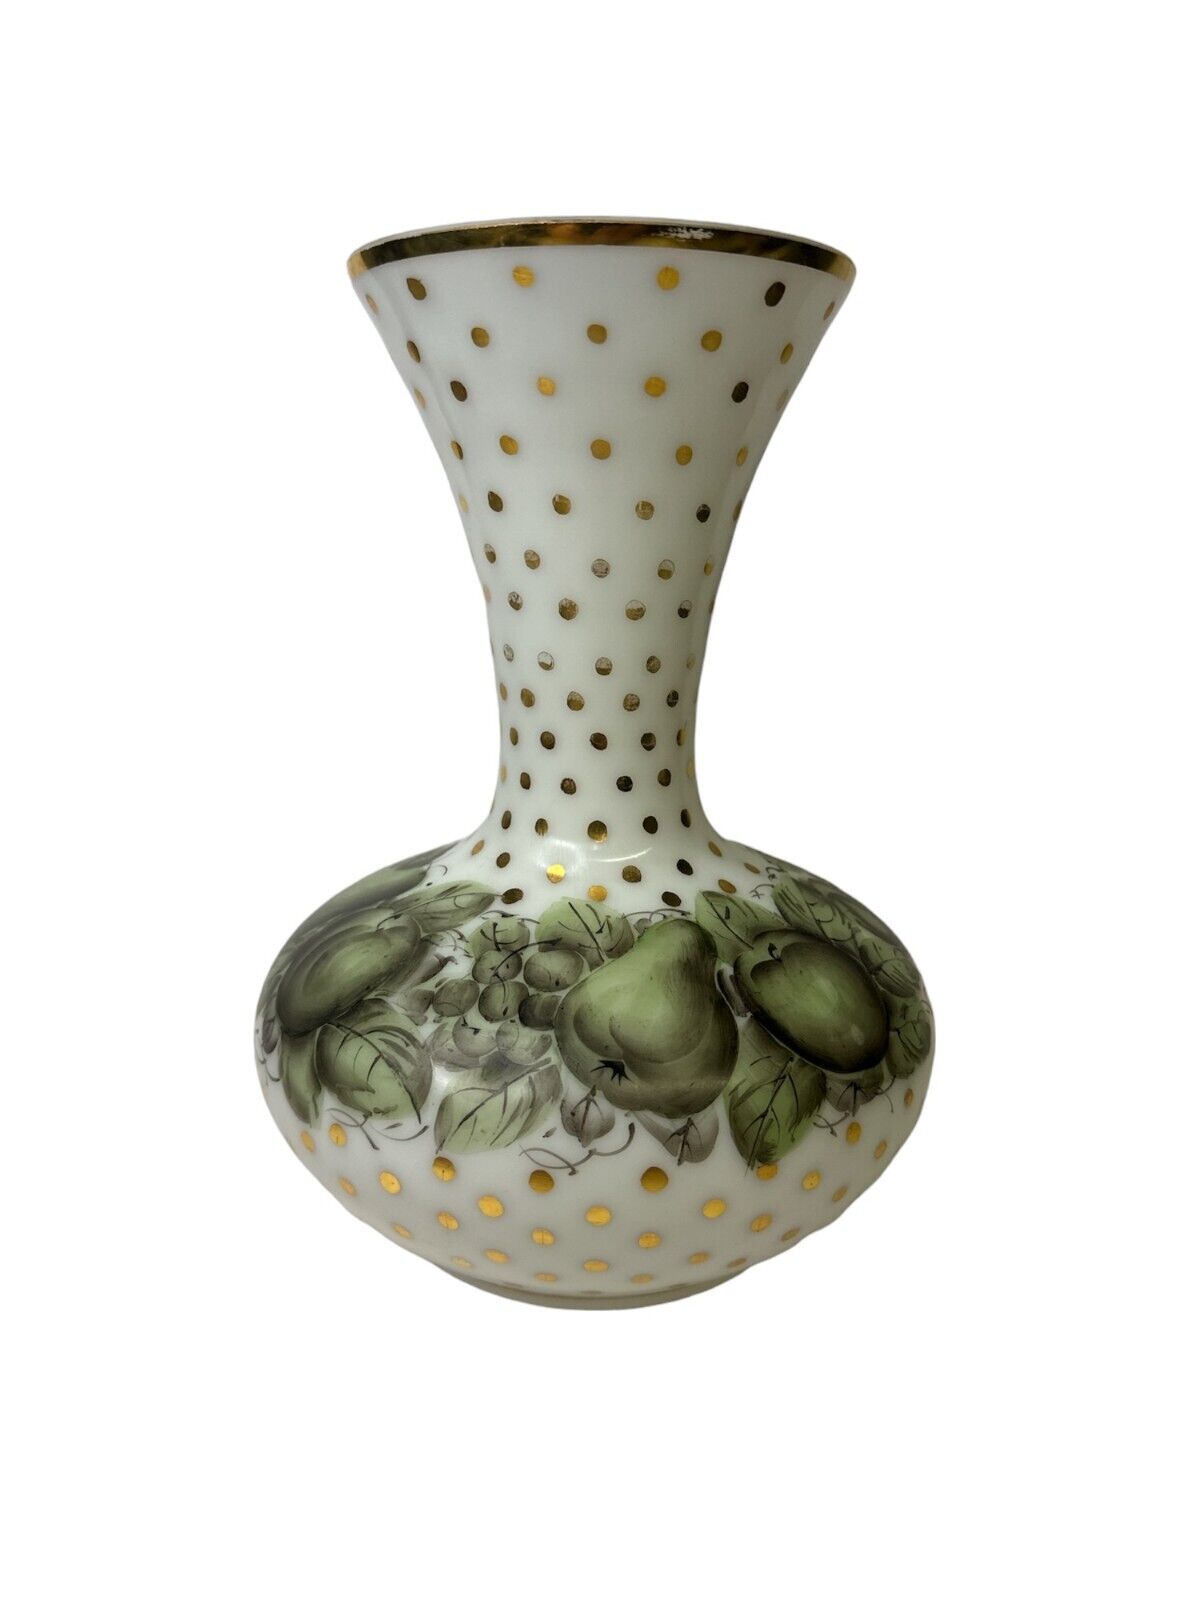 Vintage Fenton Charleton Apples and Pears Hand Painted Vase 1940’s Decor MCM